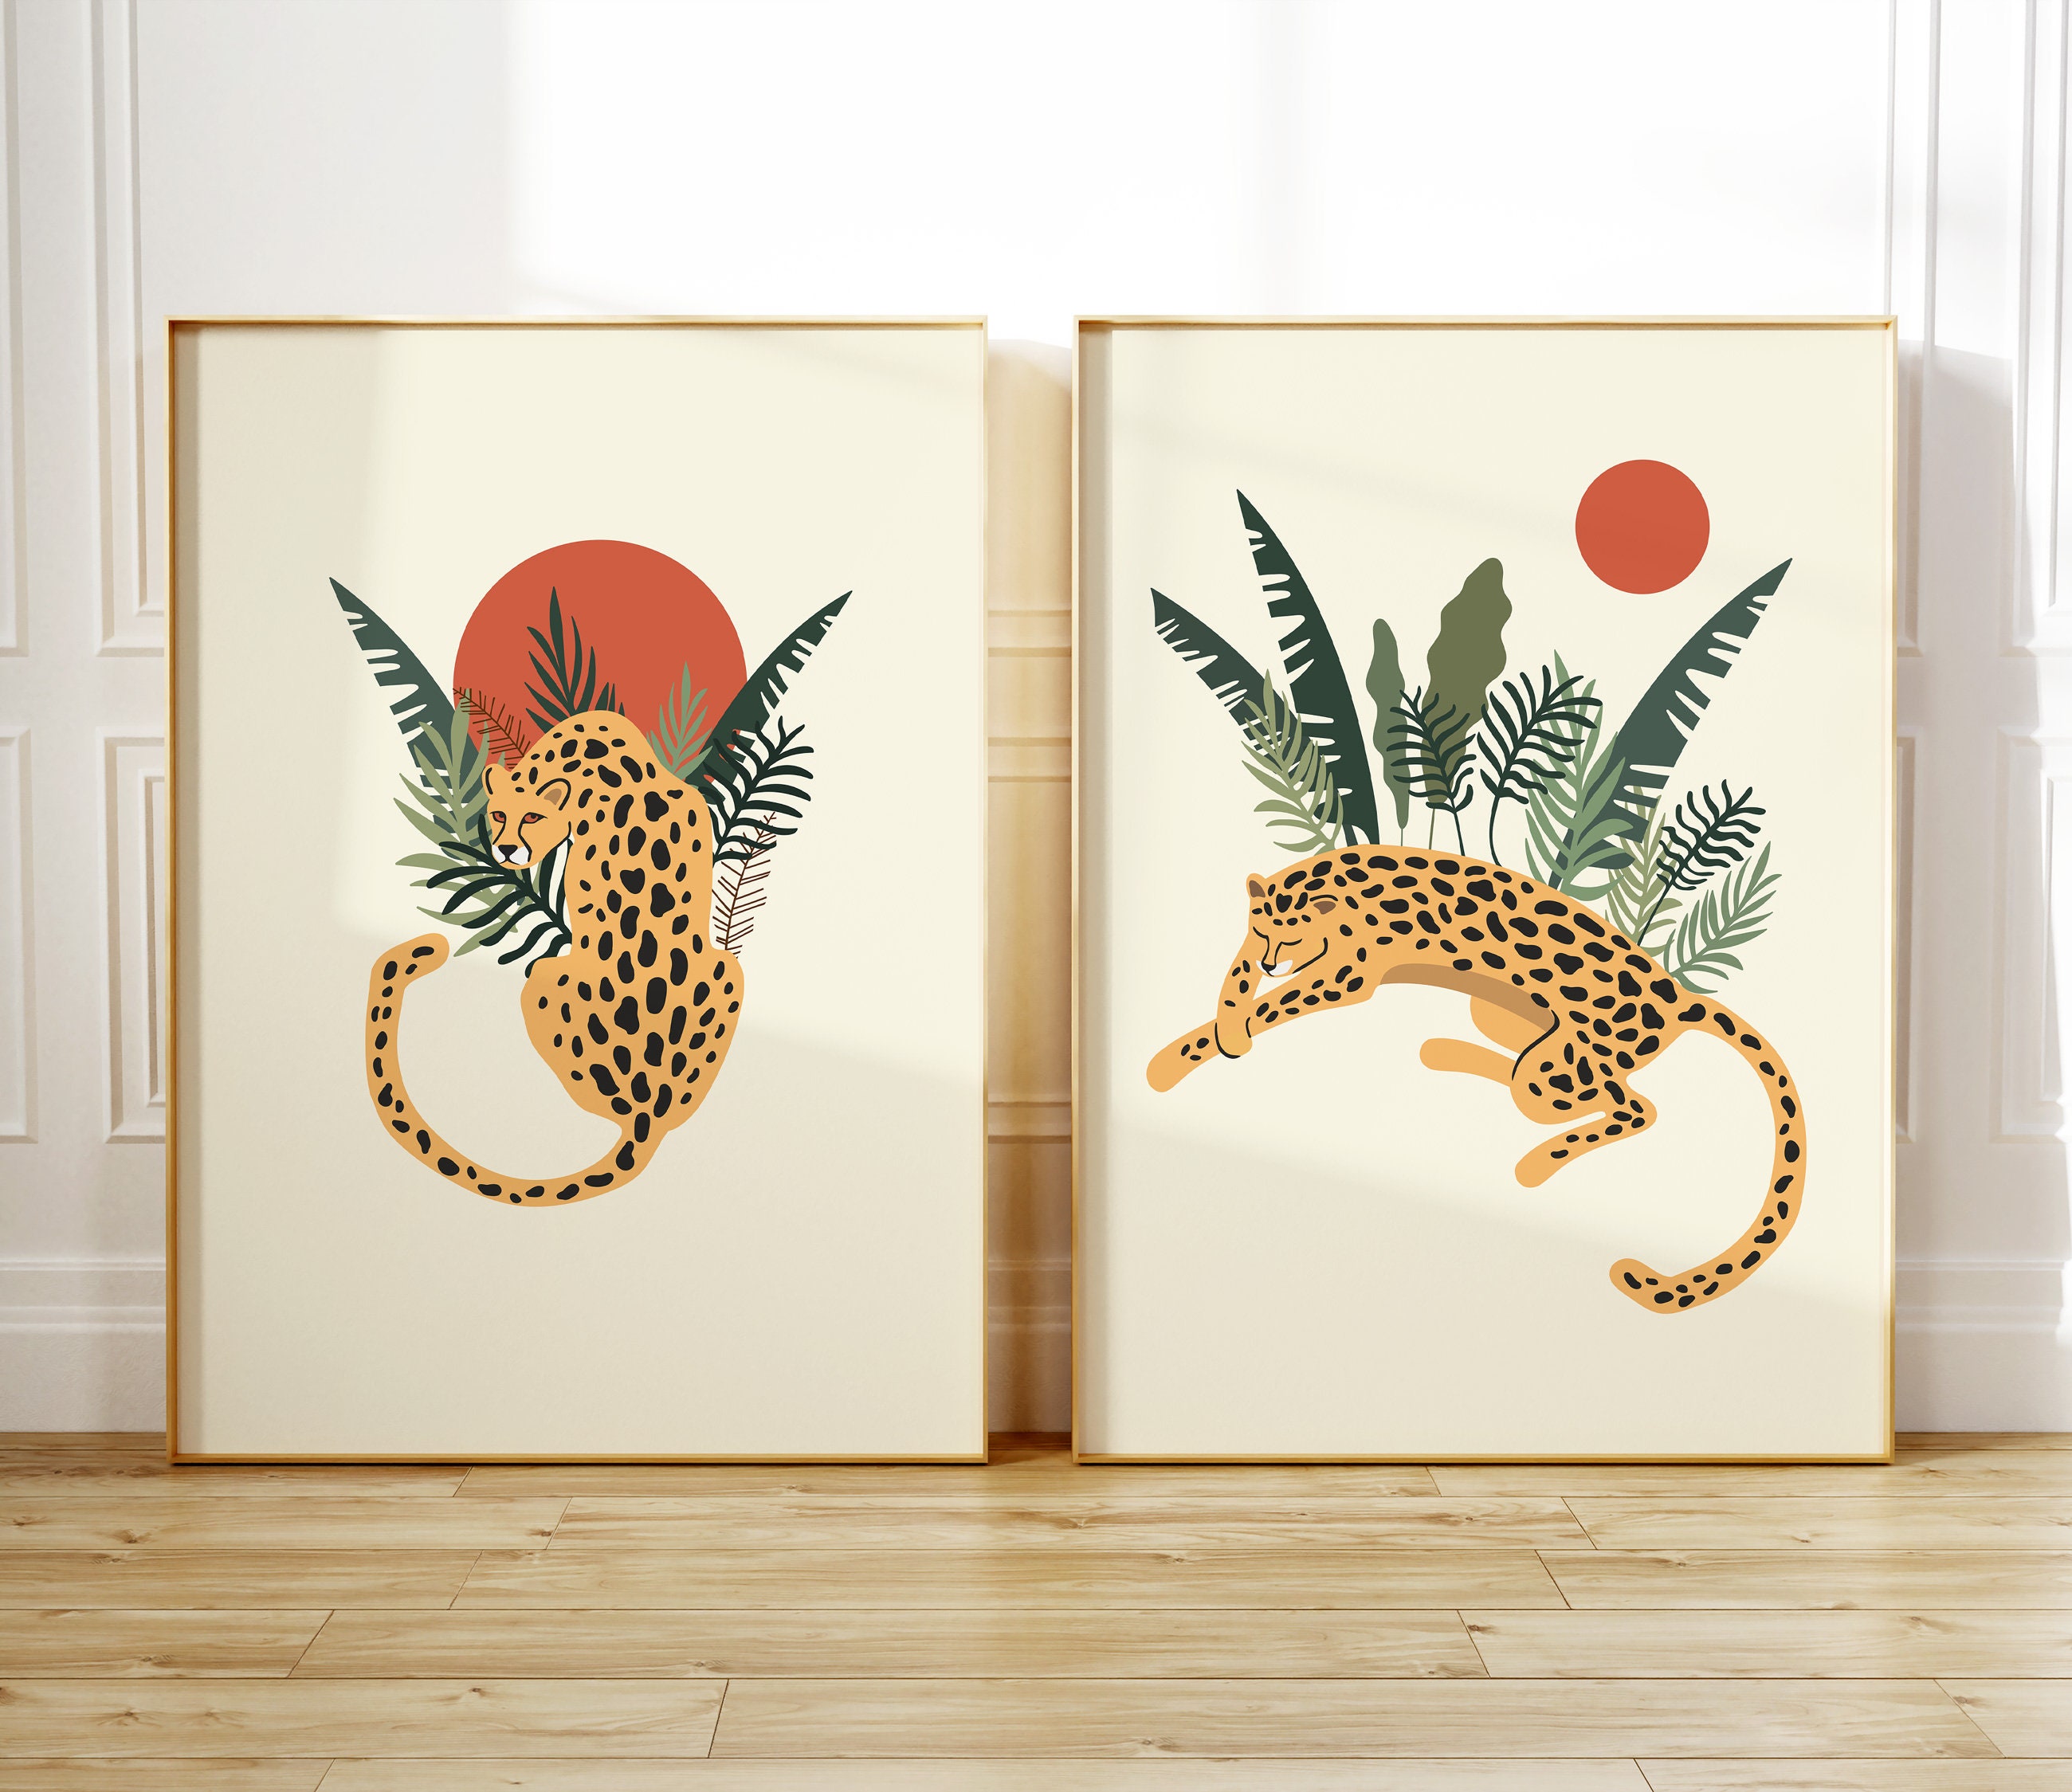 LEOPARD WALL ART Prints, Set of 3, Safari Animals Art, Leopard Print Decor,  Abstract Art, Cheetah Art, Boho Home Decor, Jungle Theme Decor 